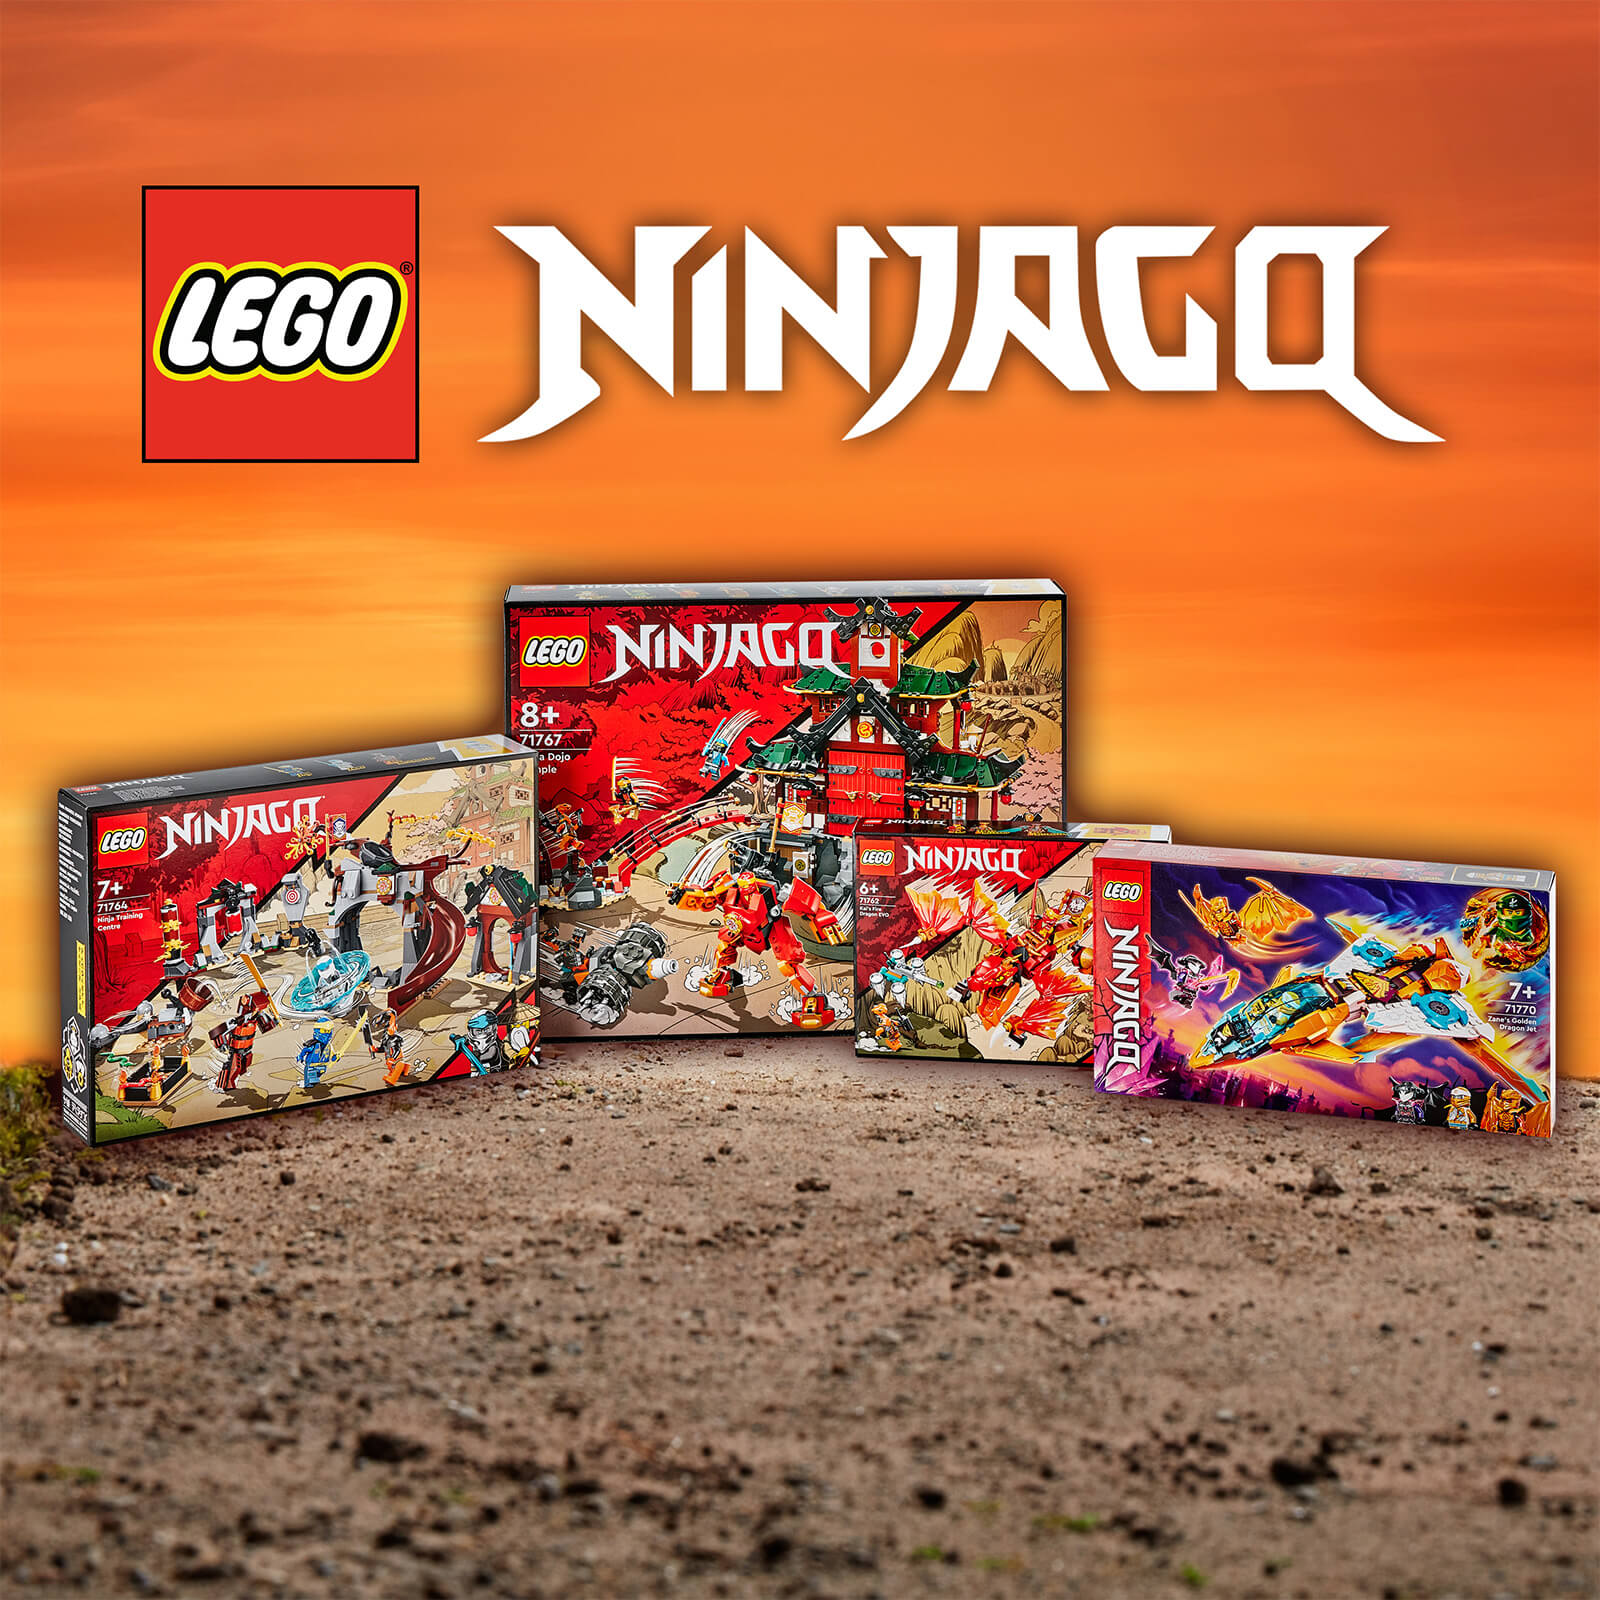 LEGO NINJAGO: Ninja Training Kit For Kids Toys – Value Saving Bundle Gift Set